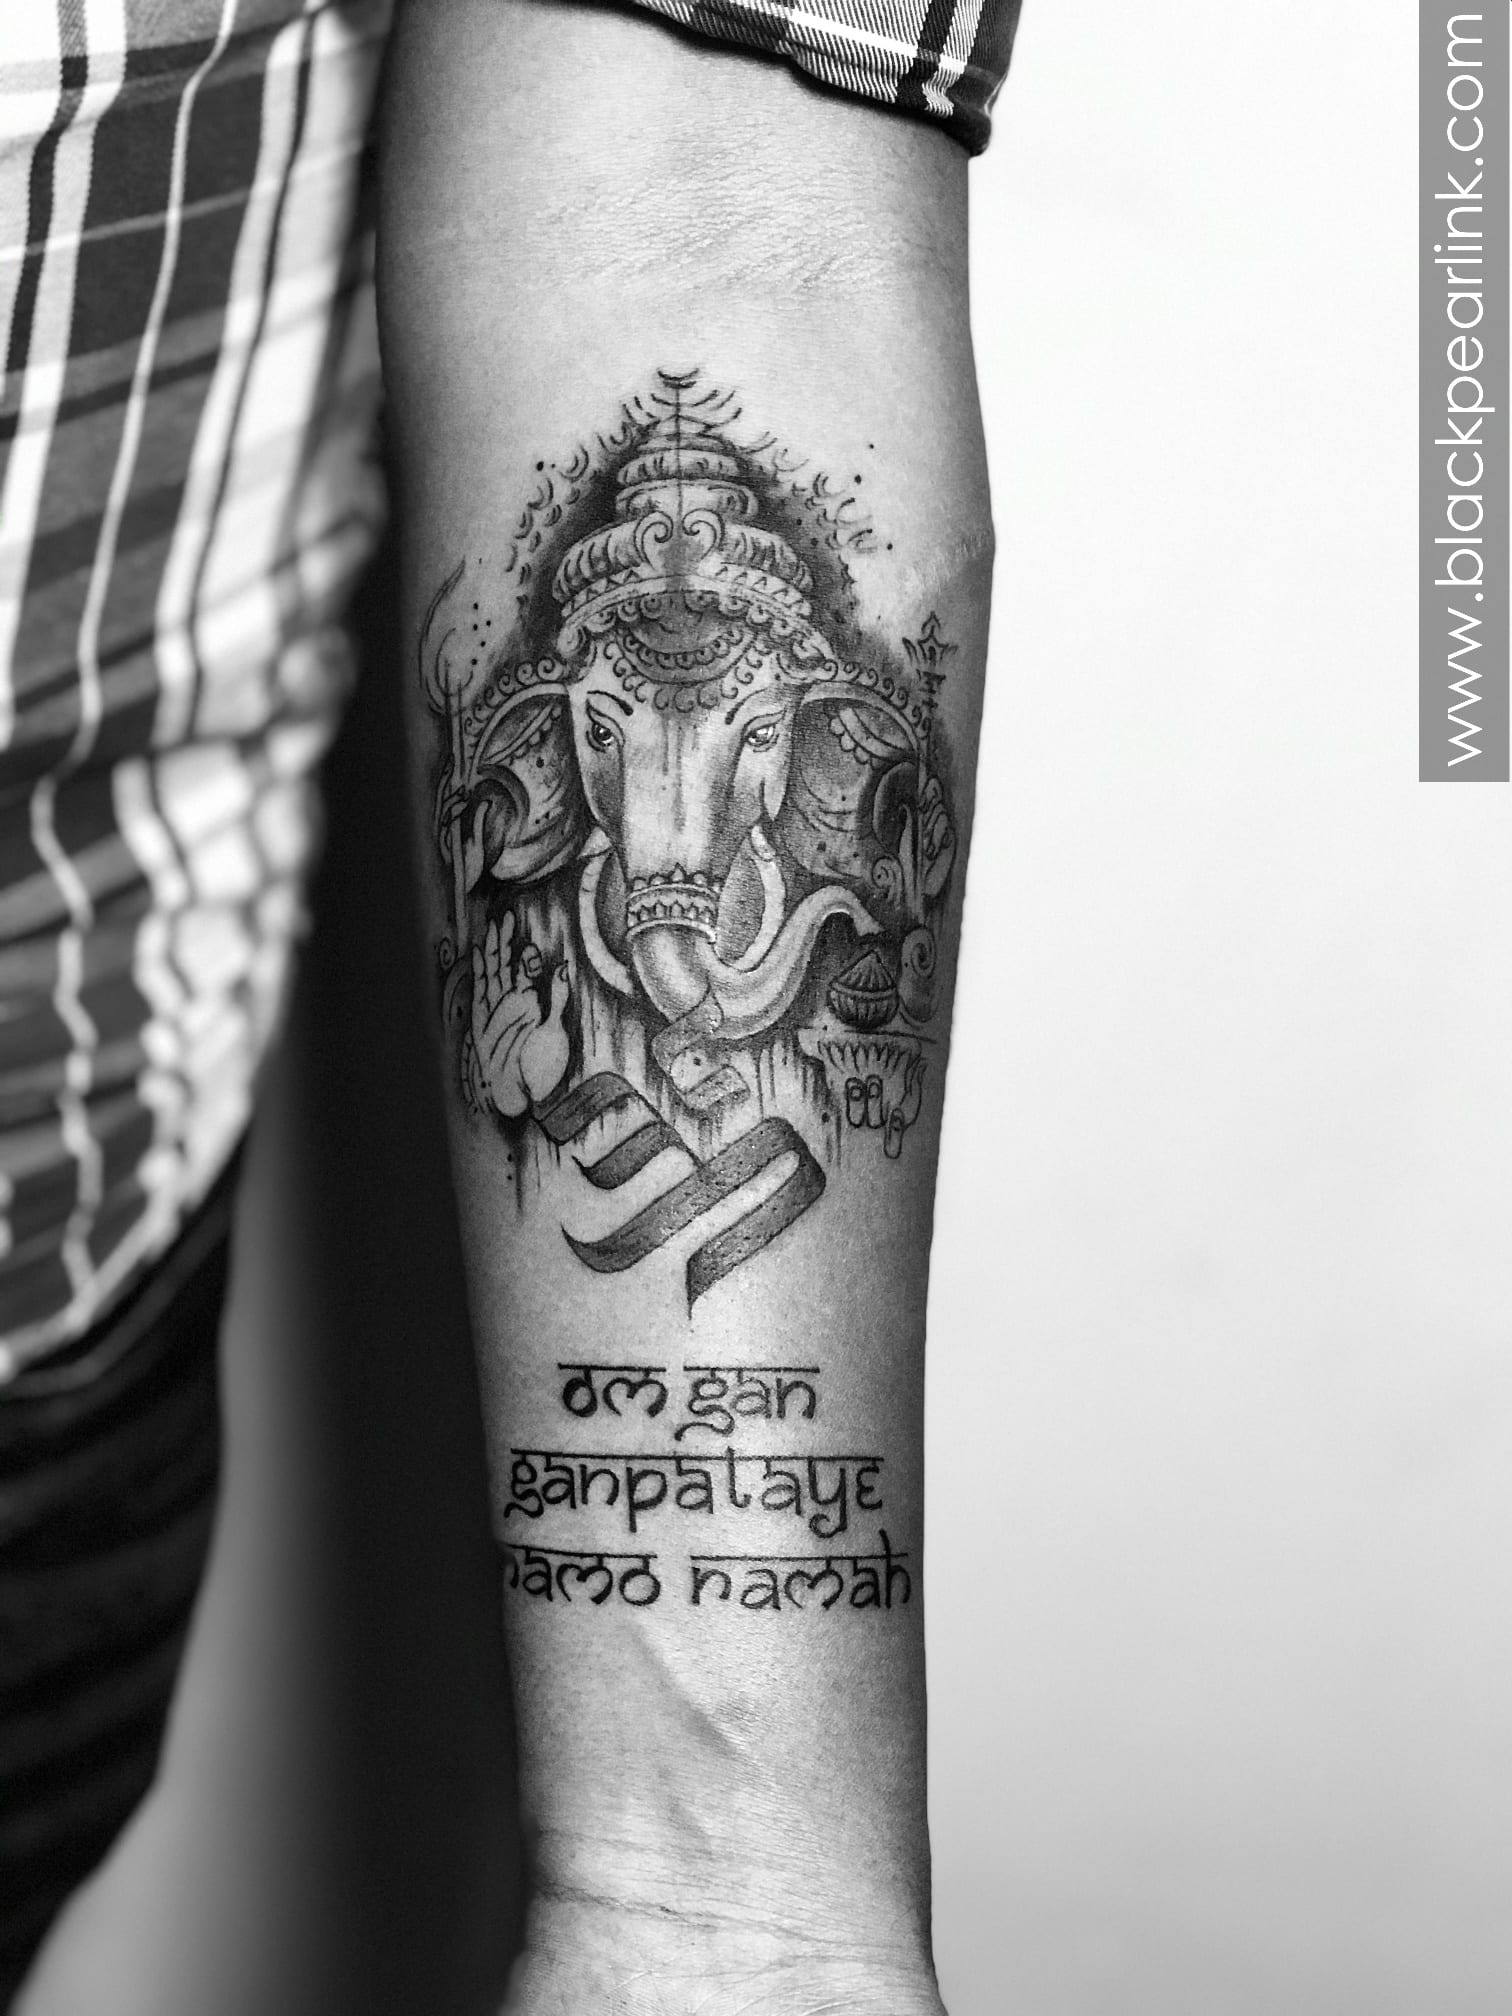 Ganesha Tattoo at Rs 600/square inch in Bengaluru | ID: 23891751491